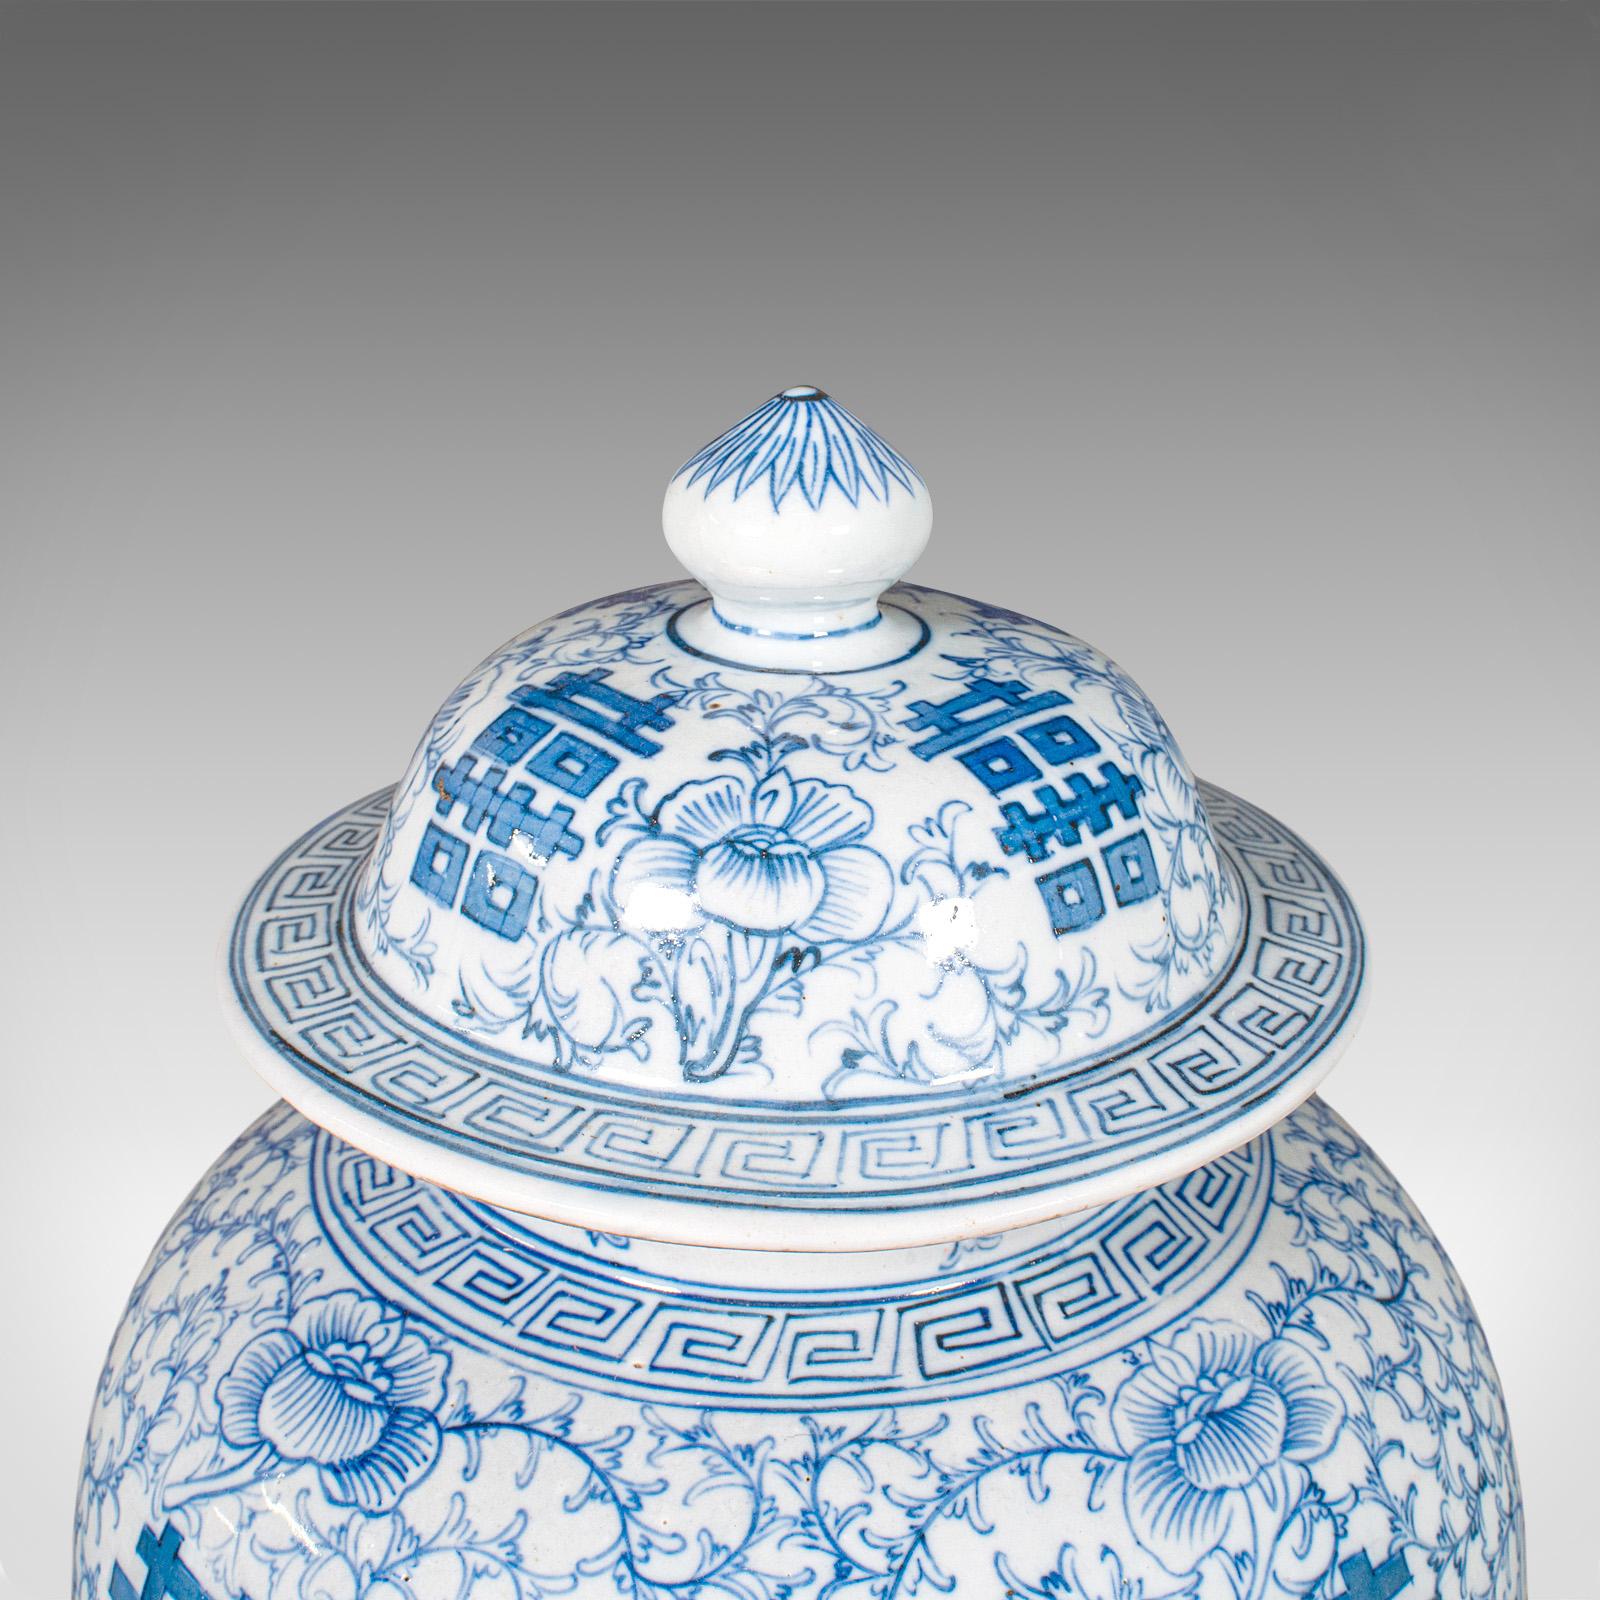 Pair Of Vintage Decorative Vases, Chinese, Ceramic, Flower Urn, Art Deco, C.1940 For Sale 4